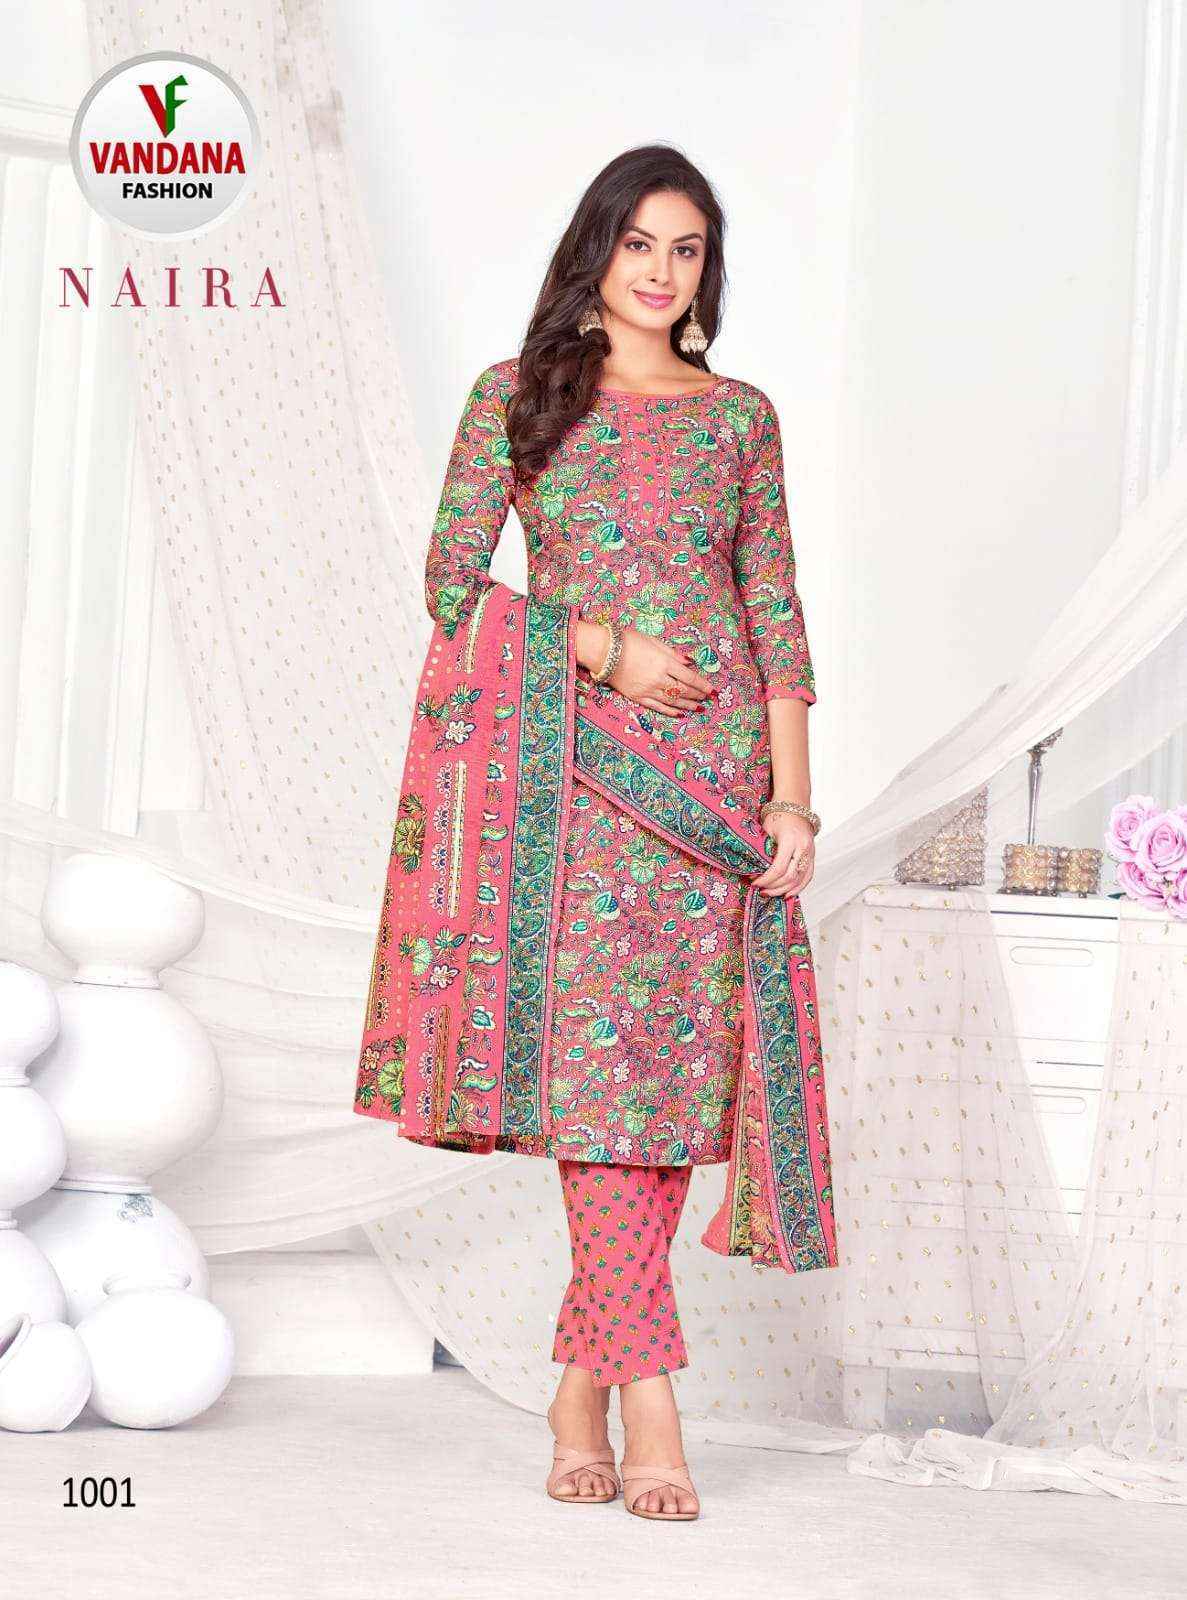 Vandana Fashion Naira Cotton Dress Material Wholesale Price